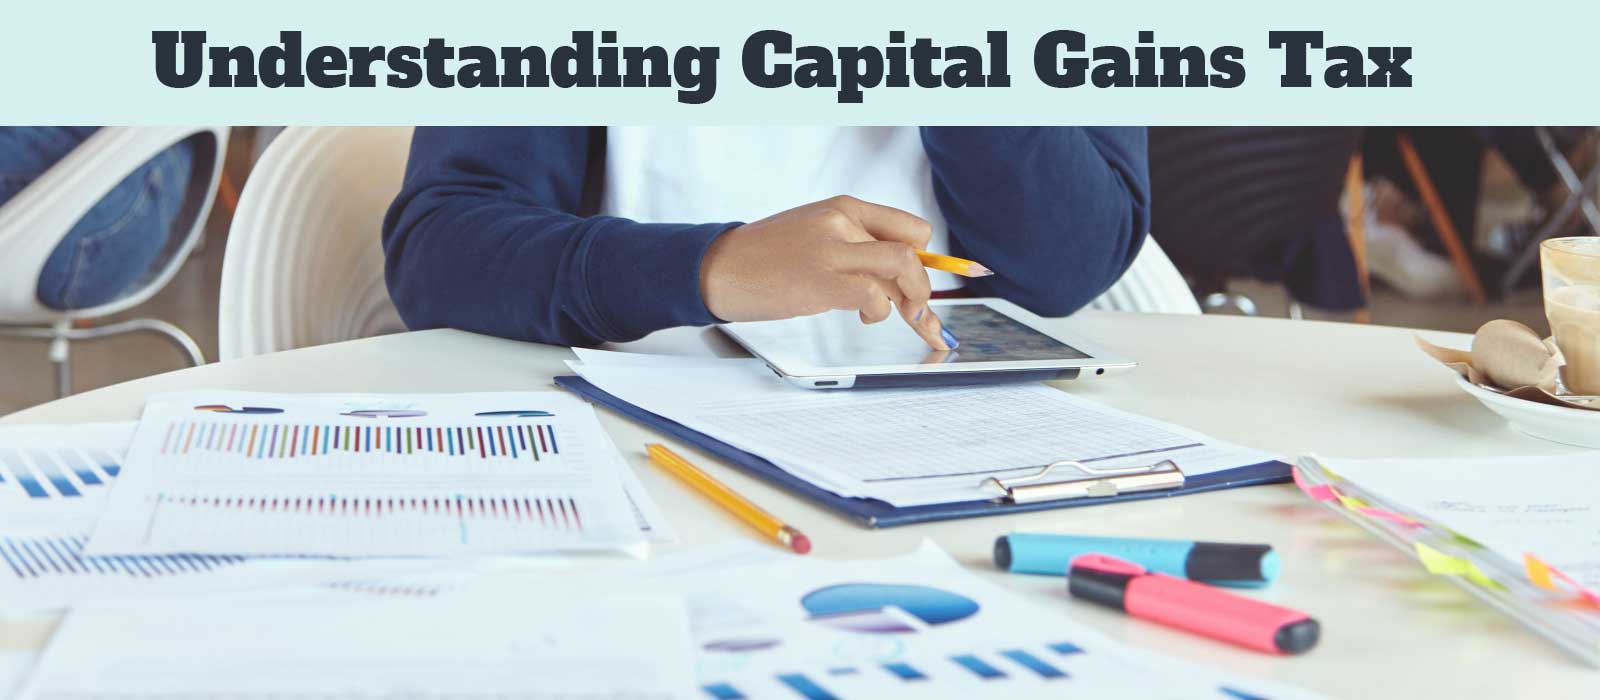 Understanding Capital Gains Tax | Capital Gains Tax Planning